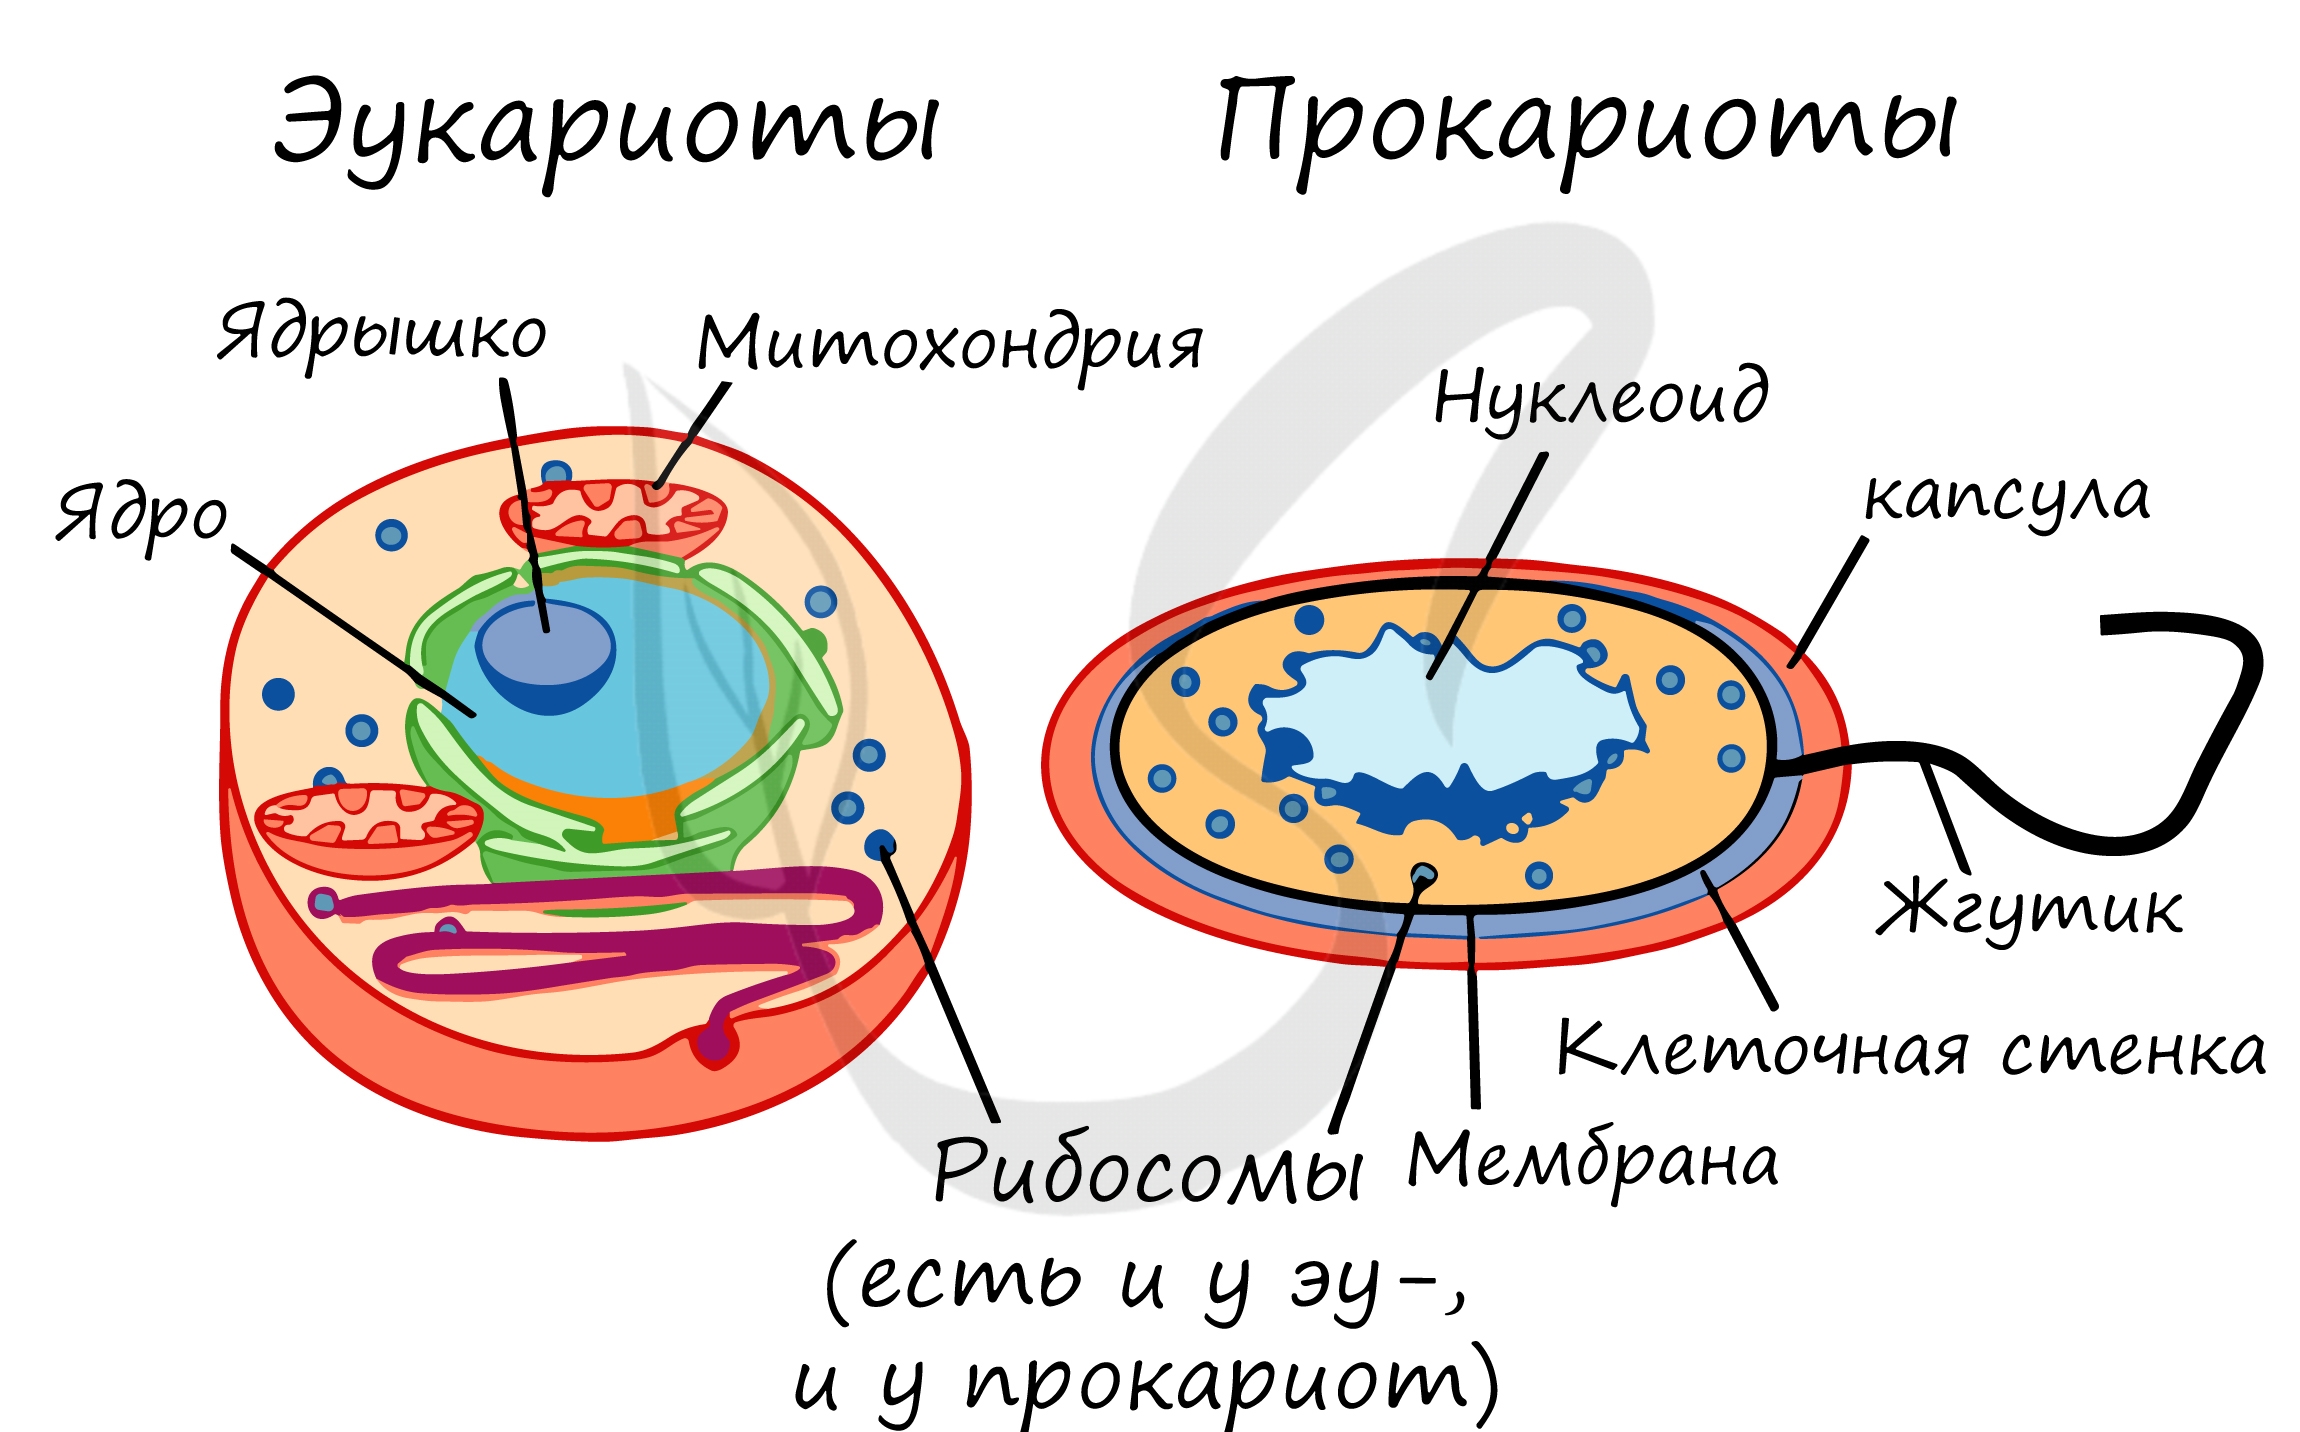 Структура клеток прокариот. Строение клетки прокариот и эукариот. Строение бактерий прокариоты и эукариоты. Отличие прокариот от эукариот рисунок. Прокариотическая клетка и эукариотическая клетка строение.